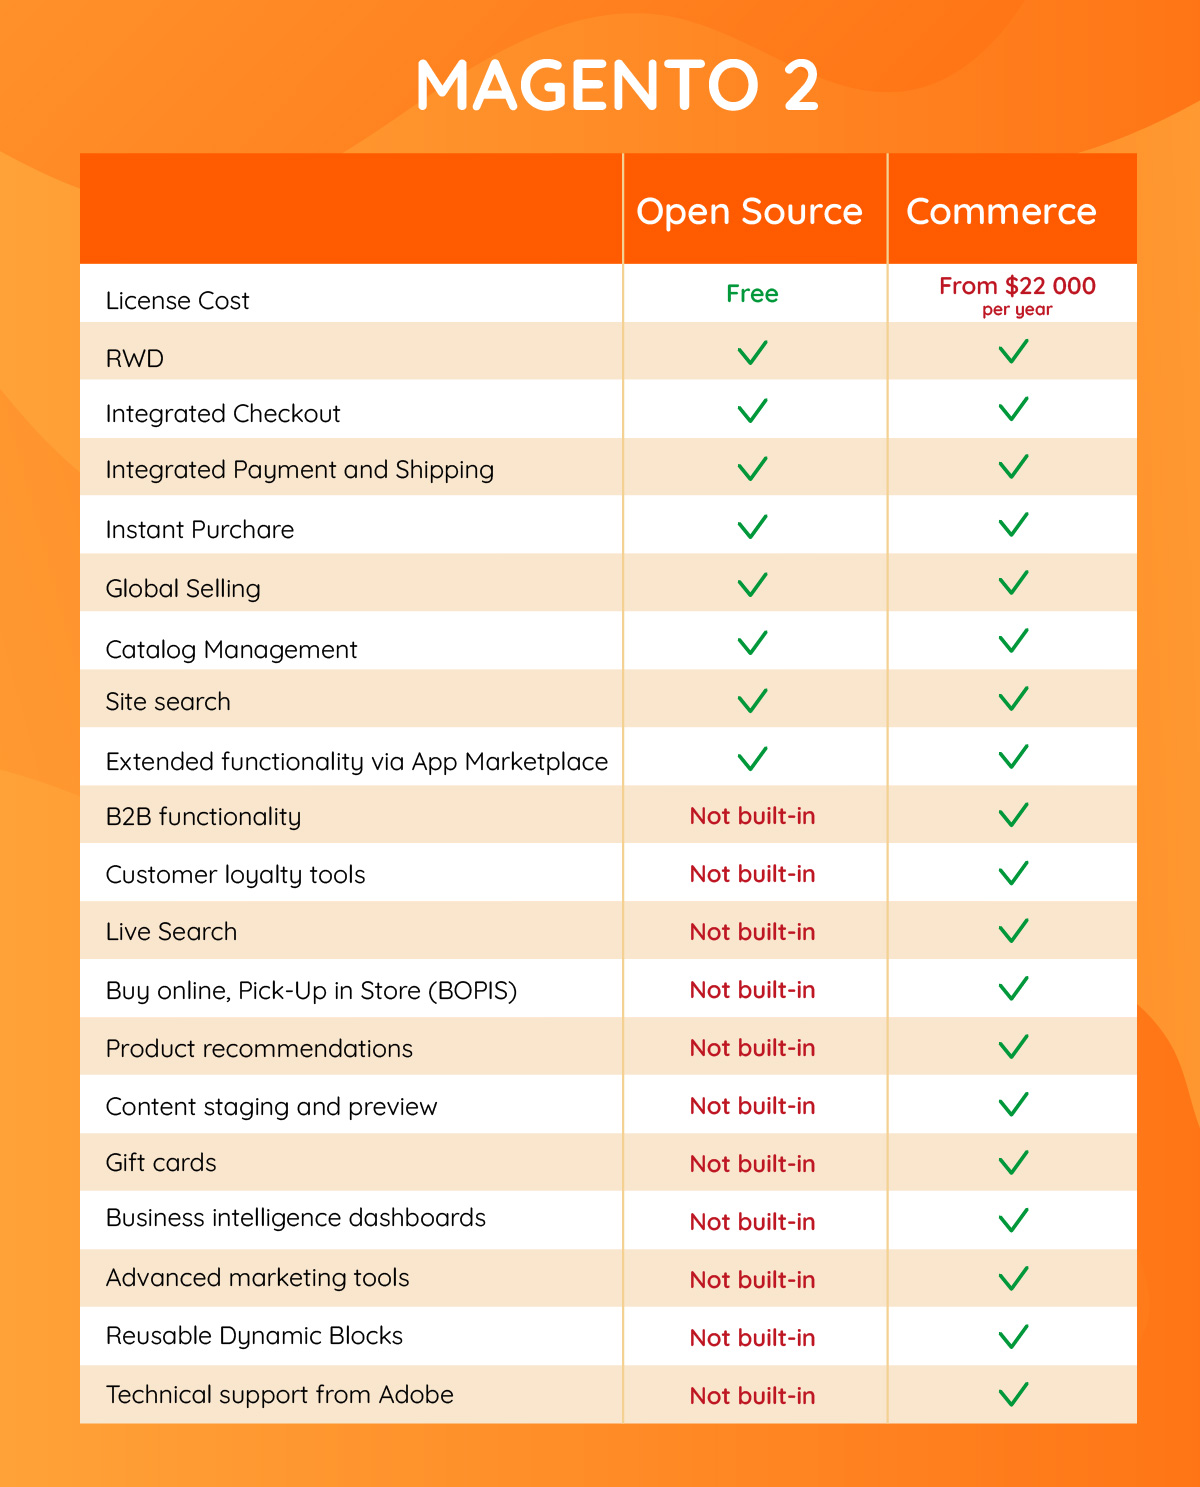 Magento Open Source vs Commerce